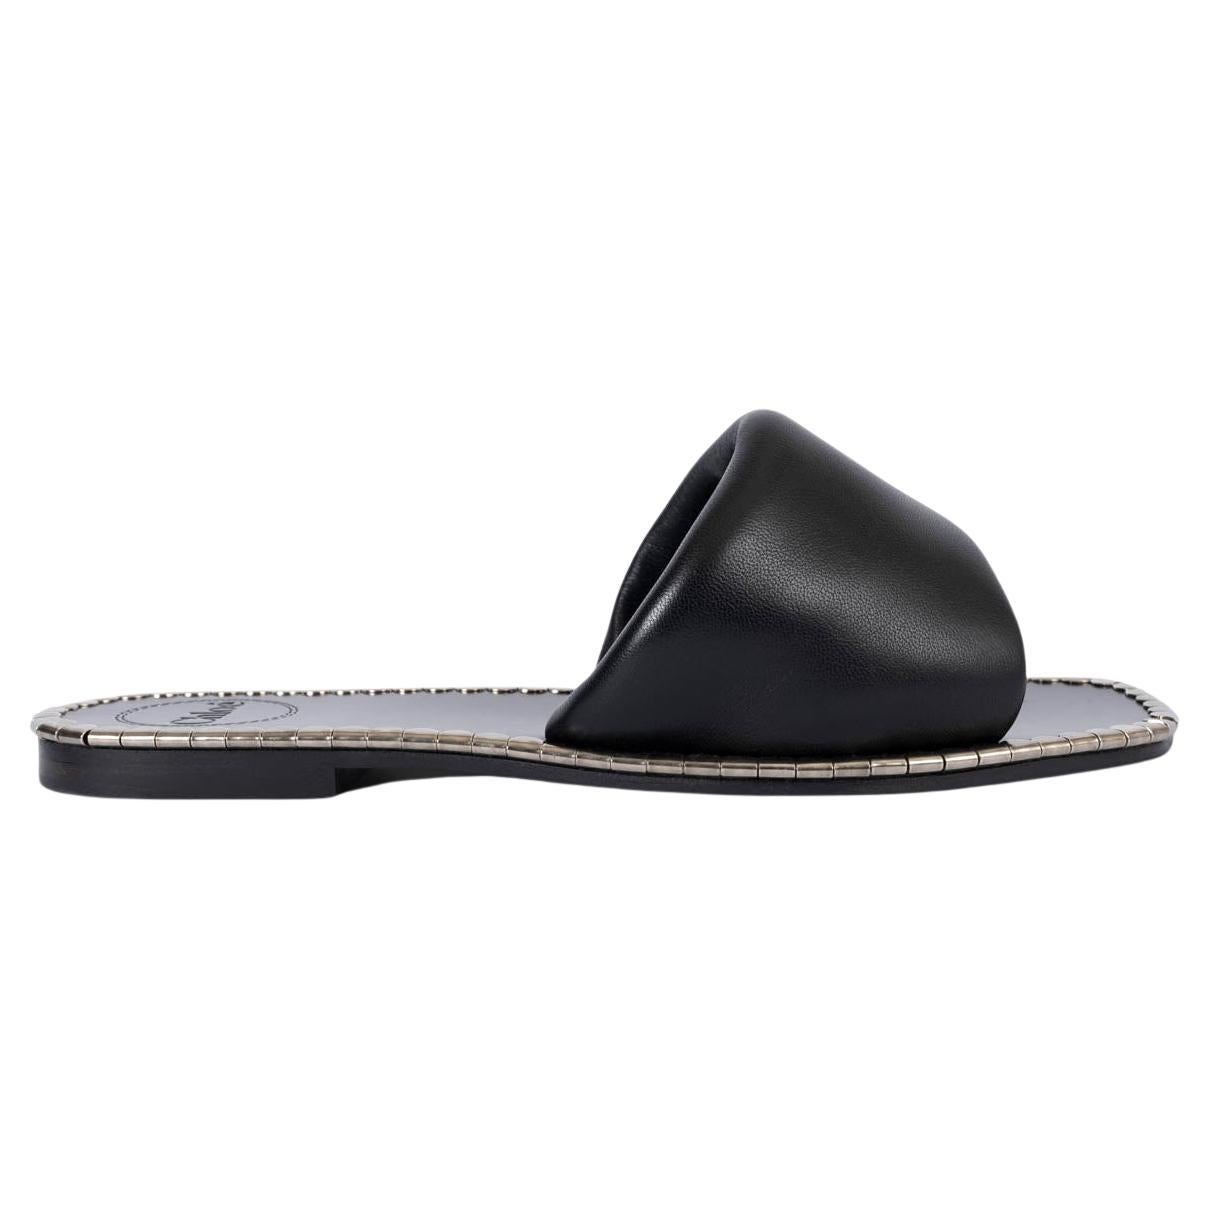 CHLOE black leather IDOL Slides Sandals Shoes 37 For Sale